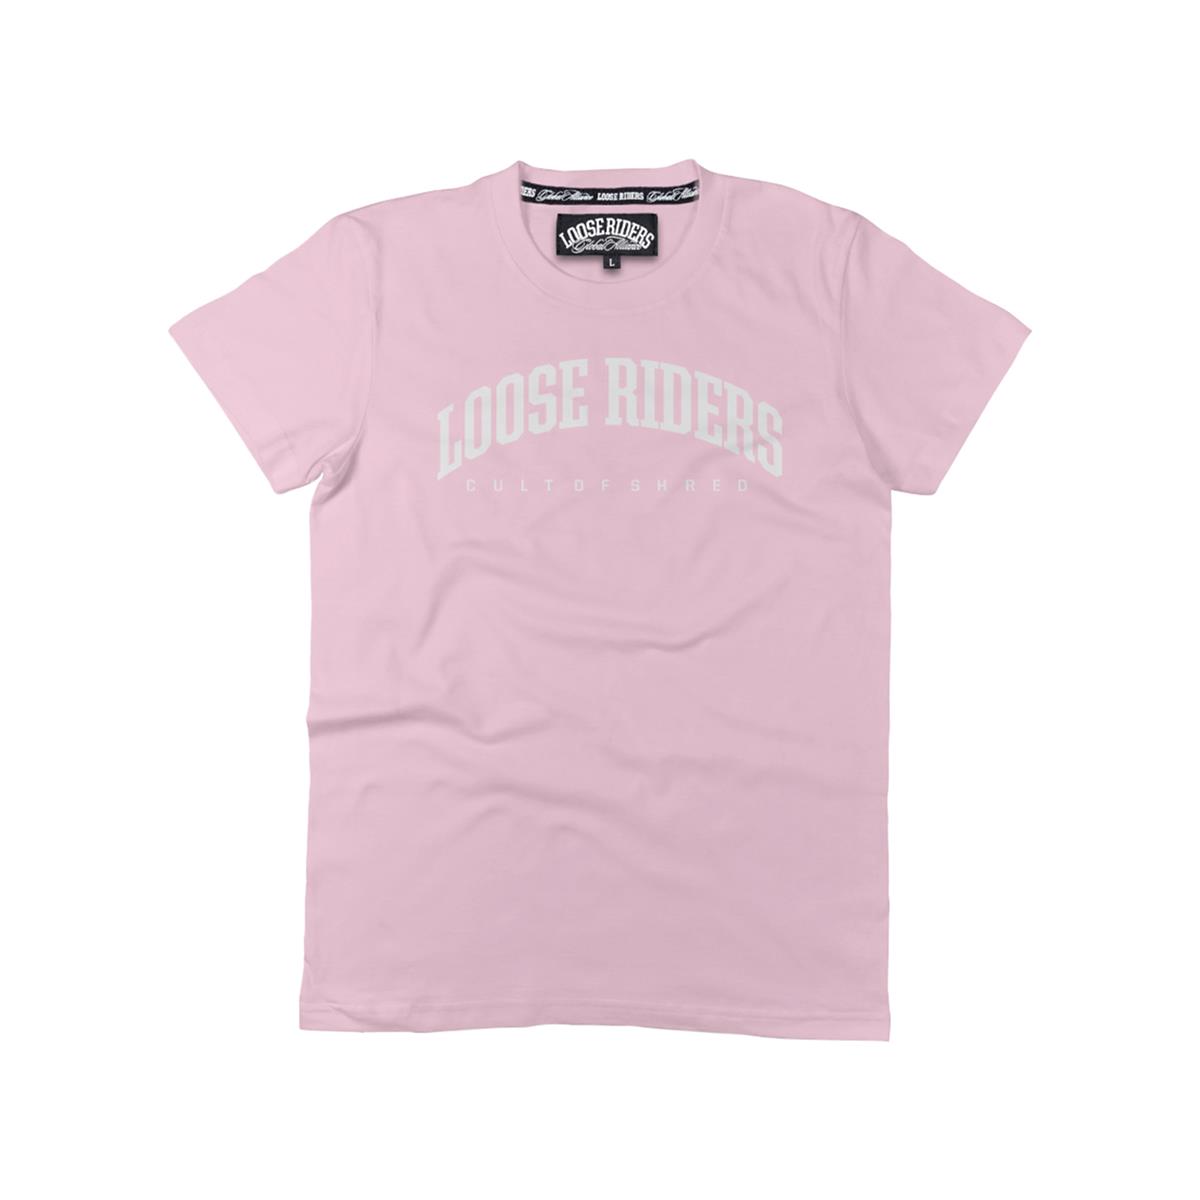 Loose Riders Kids T-Shirt